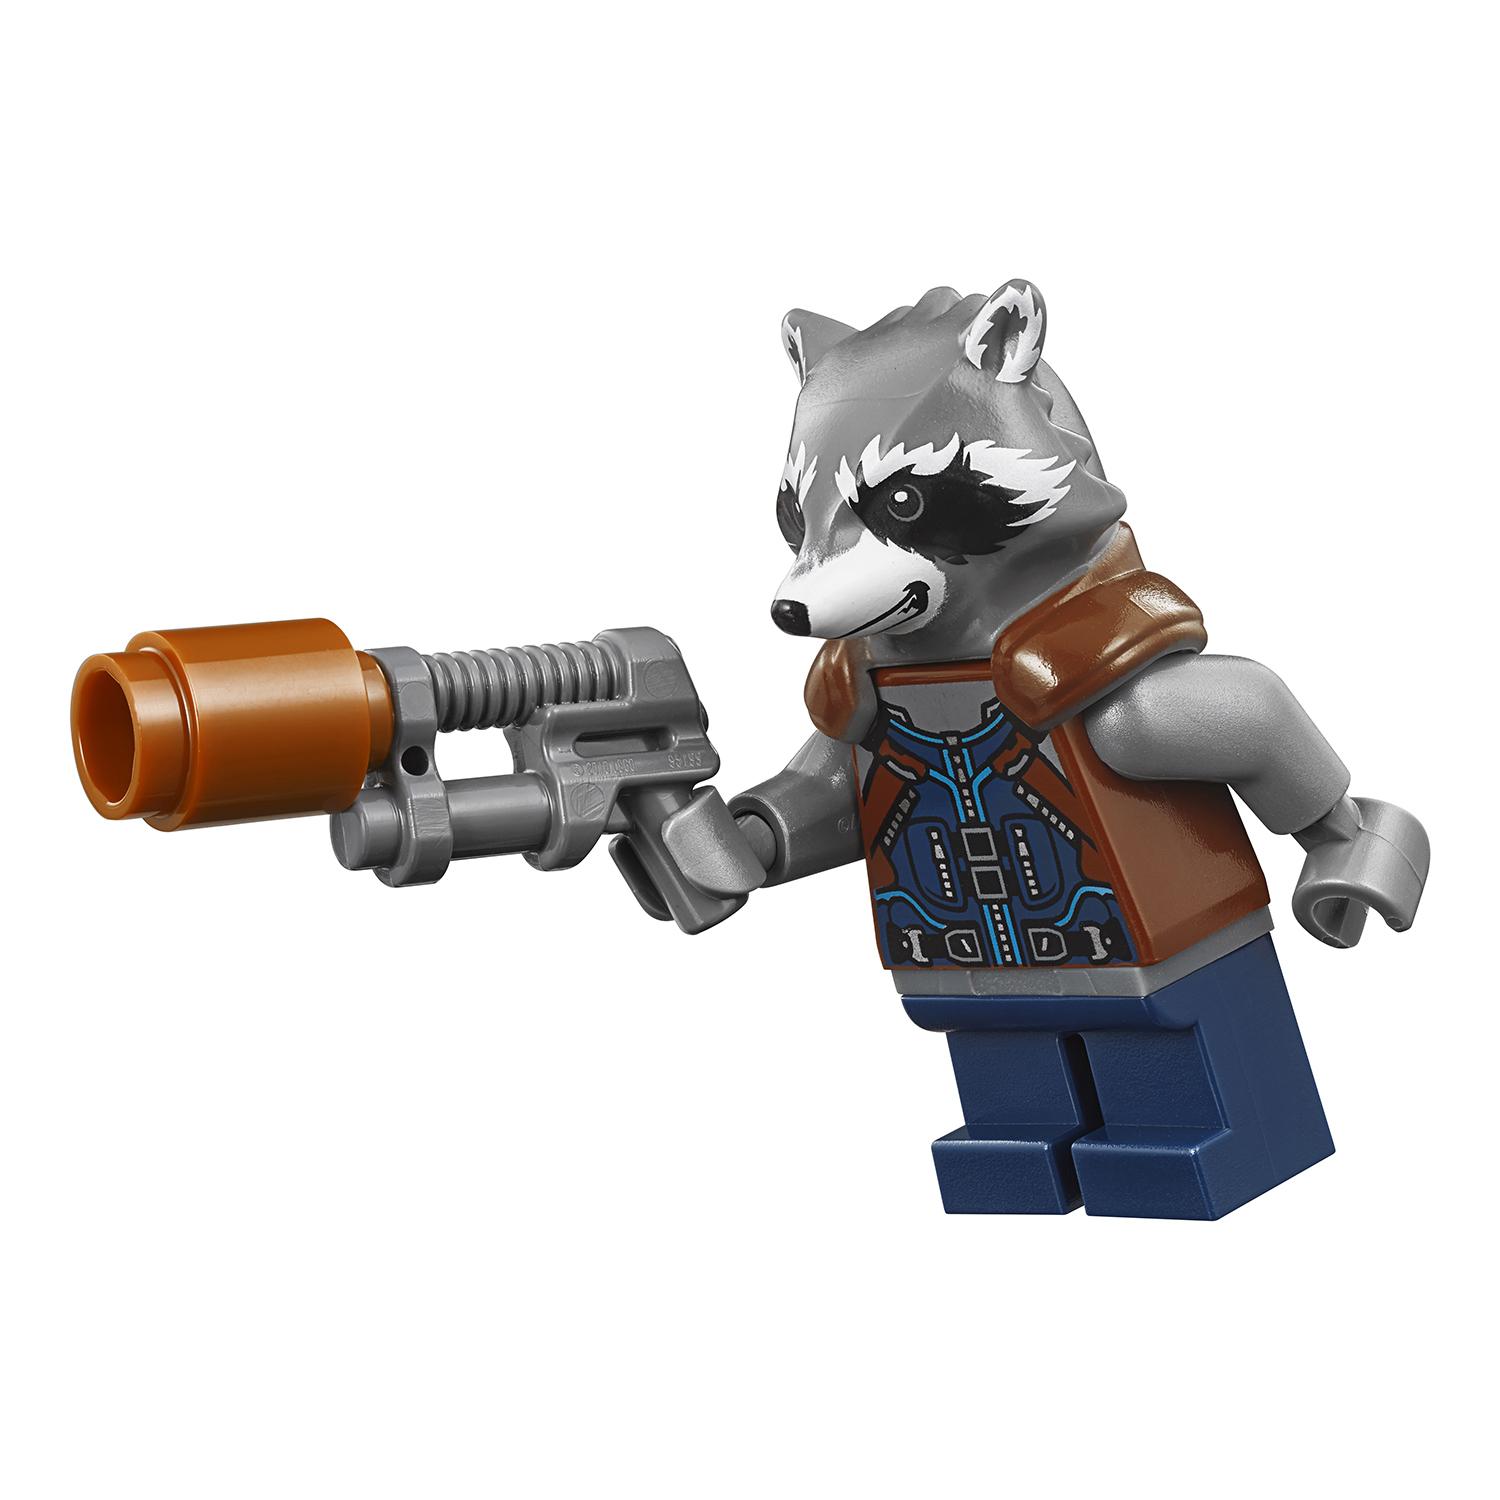 Lego Super Heroes 76102 В поисках оружия Тора